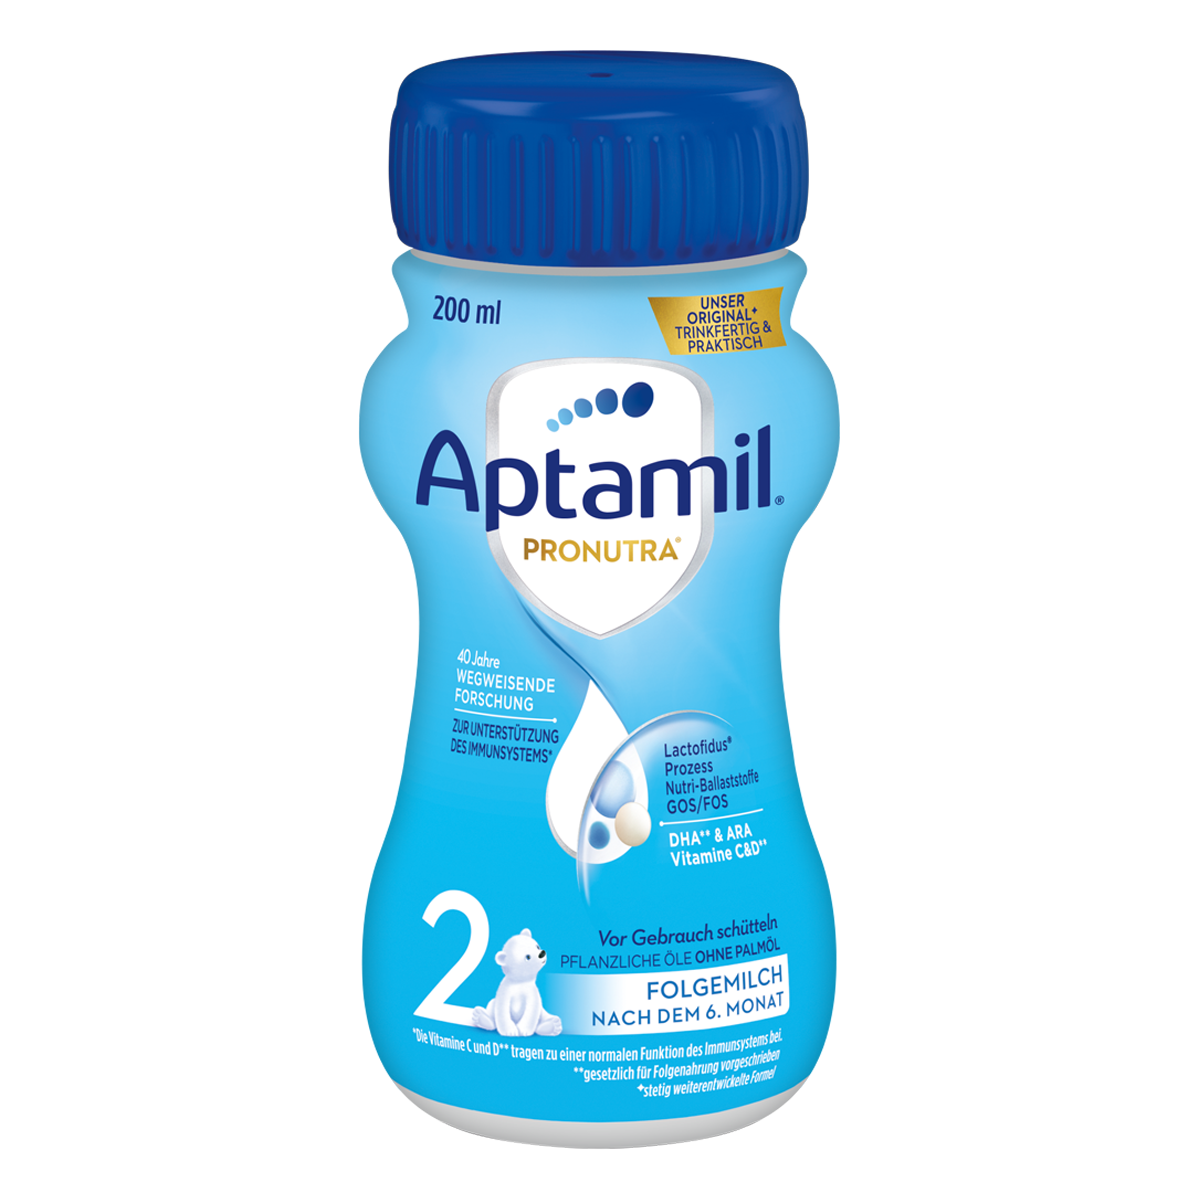 Aptamil 2 Pronutra trinkfertig 200 ml, Folgemilch 